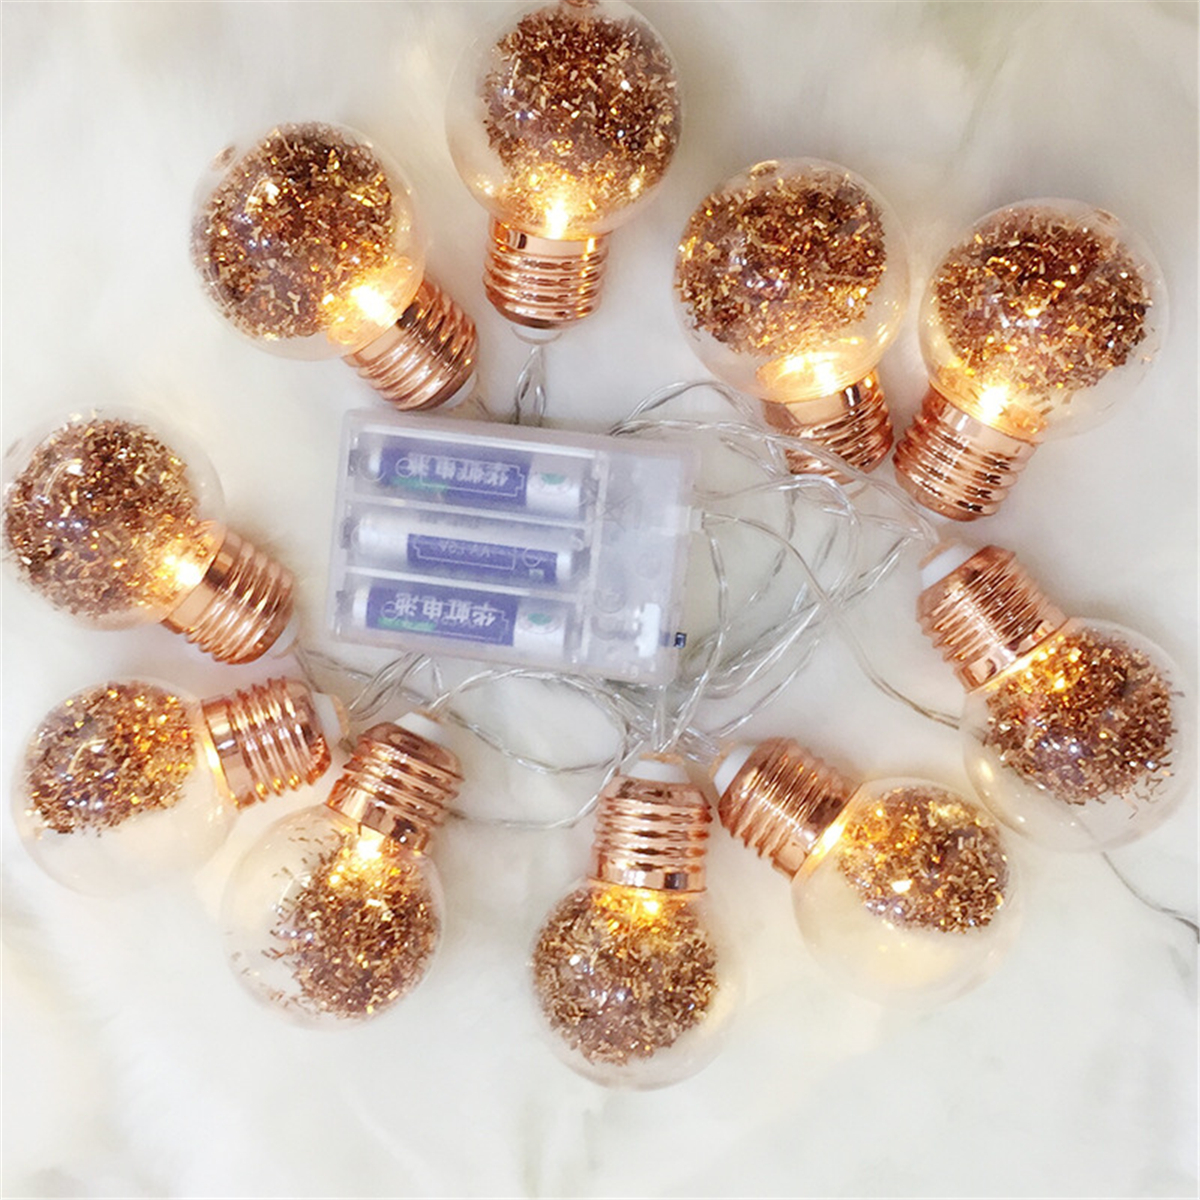 10-LED-Bulbs-String-Lights-Fairy-Lamp-Patio-Party-Yard-Garden-Wedding-Home-Decorative-Night-Light-1538526-2